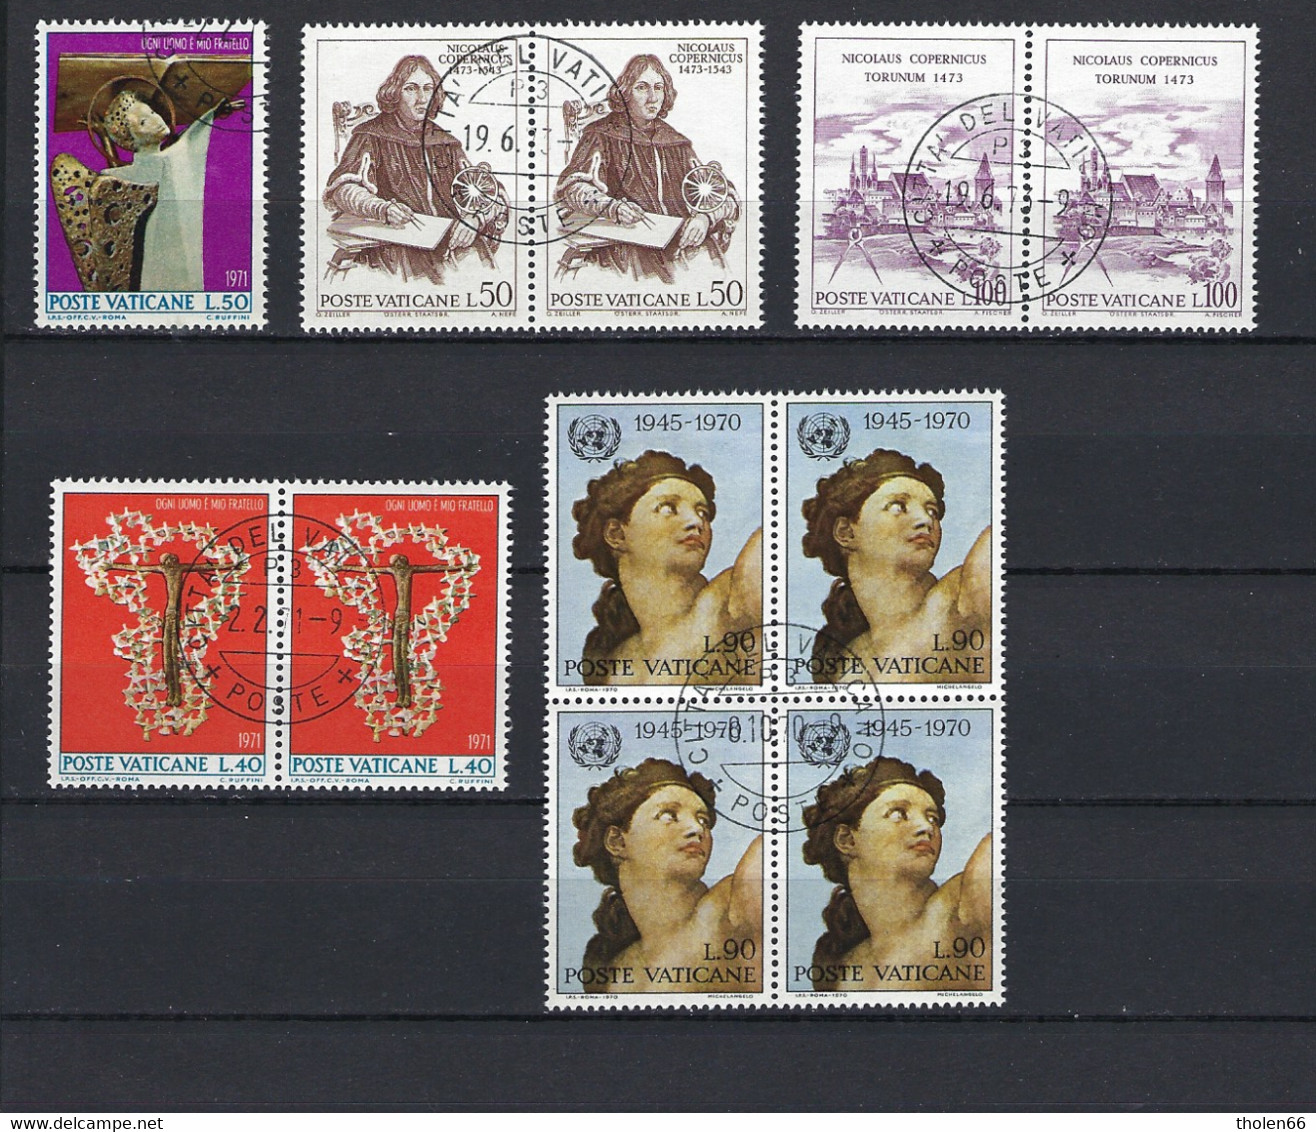 Vatican – Vaticono – Vaticaan - Small Lot Of Used (º) Stamps (Lot 445) - Colecciones